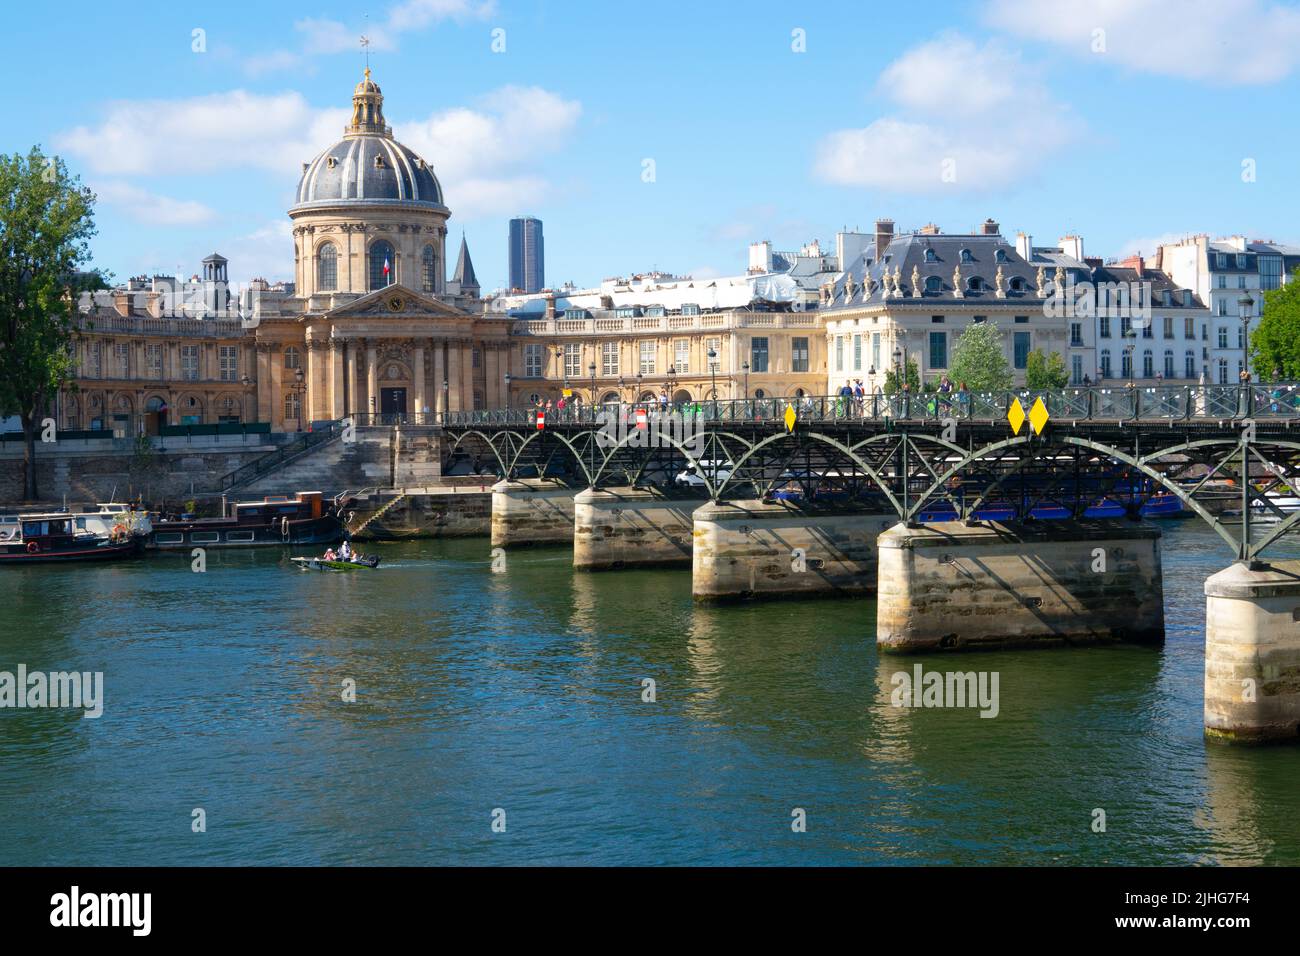 Pont des Arts or Passerelle des Arts pedestrian bridge across River Seine with the dome of Institut de France in the background Paris France Stock Photo